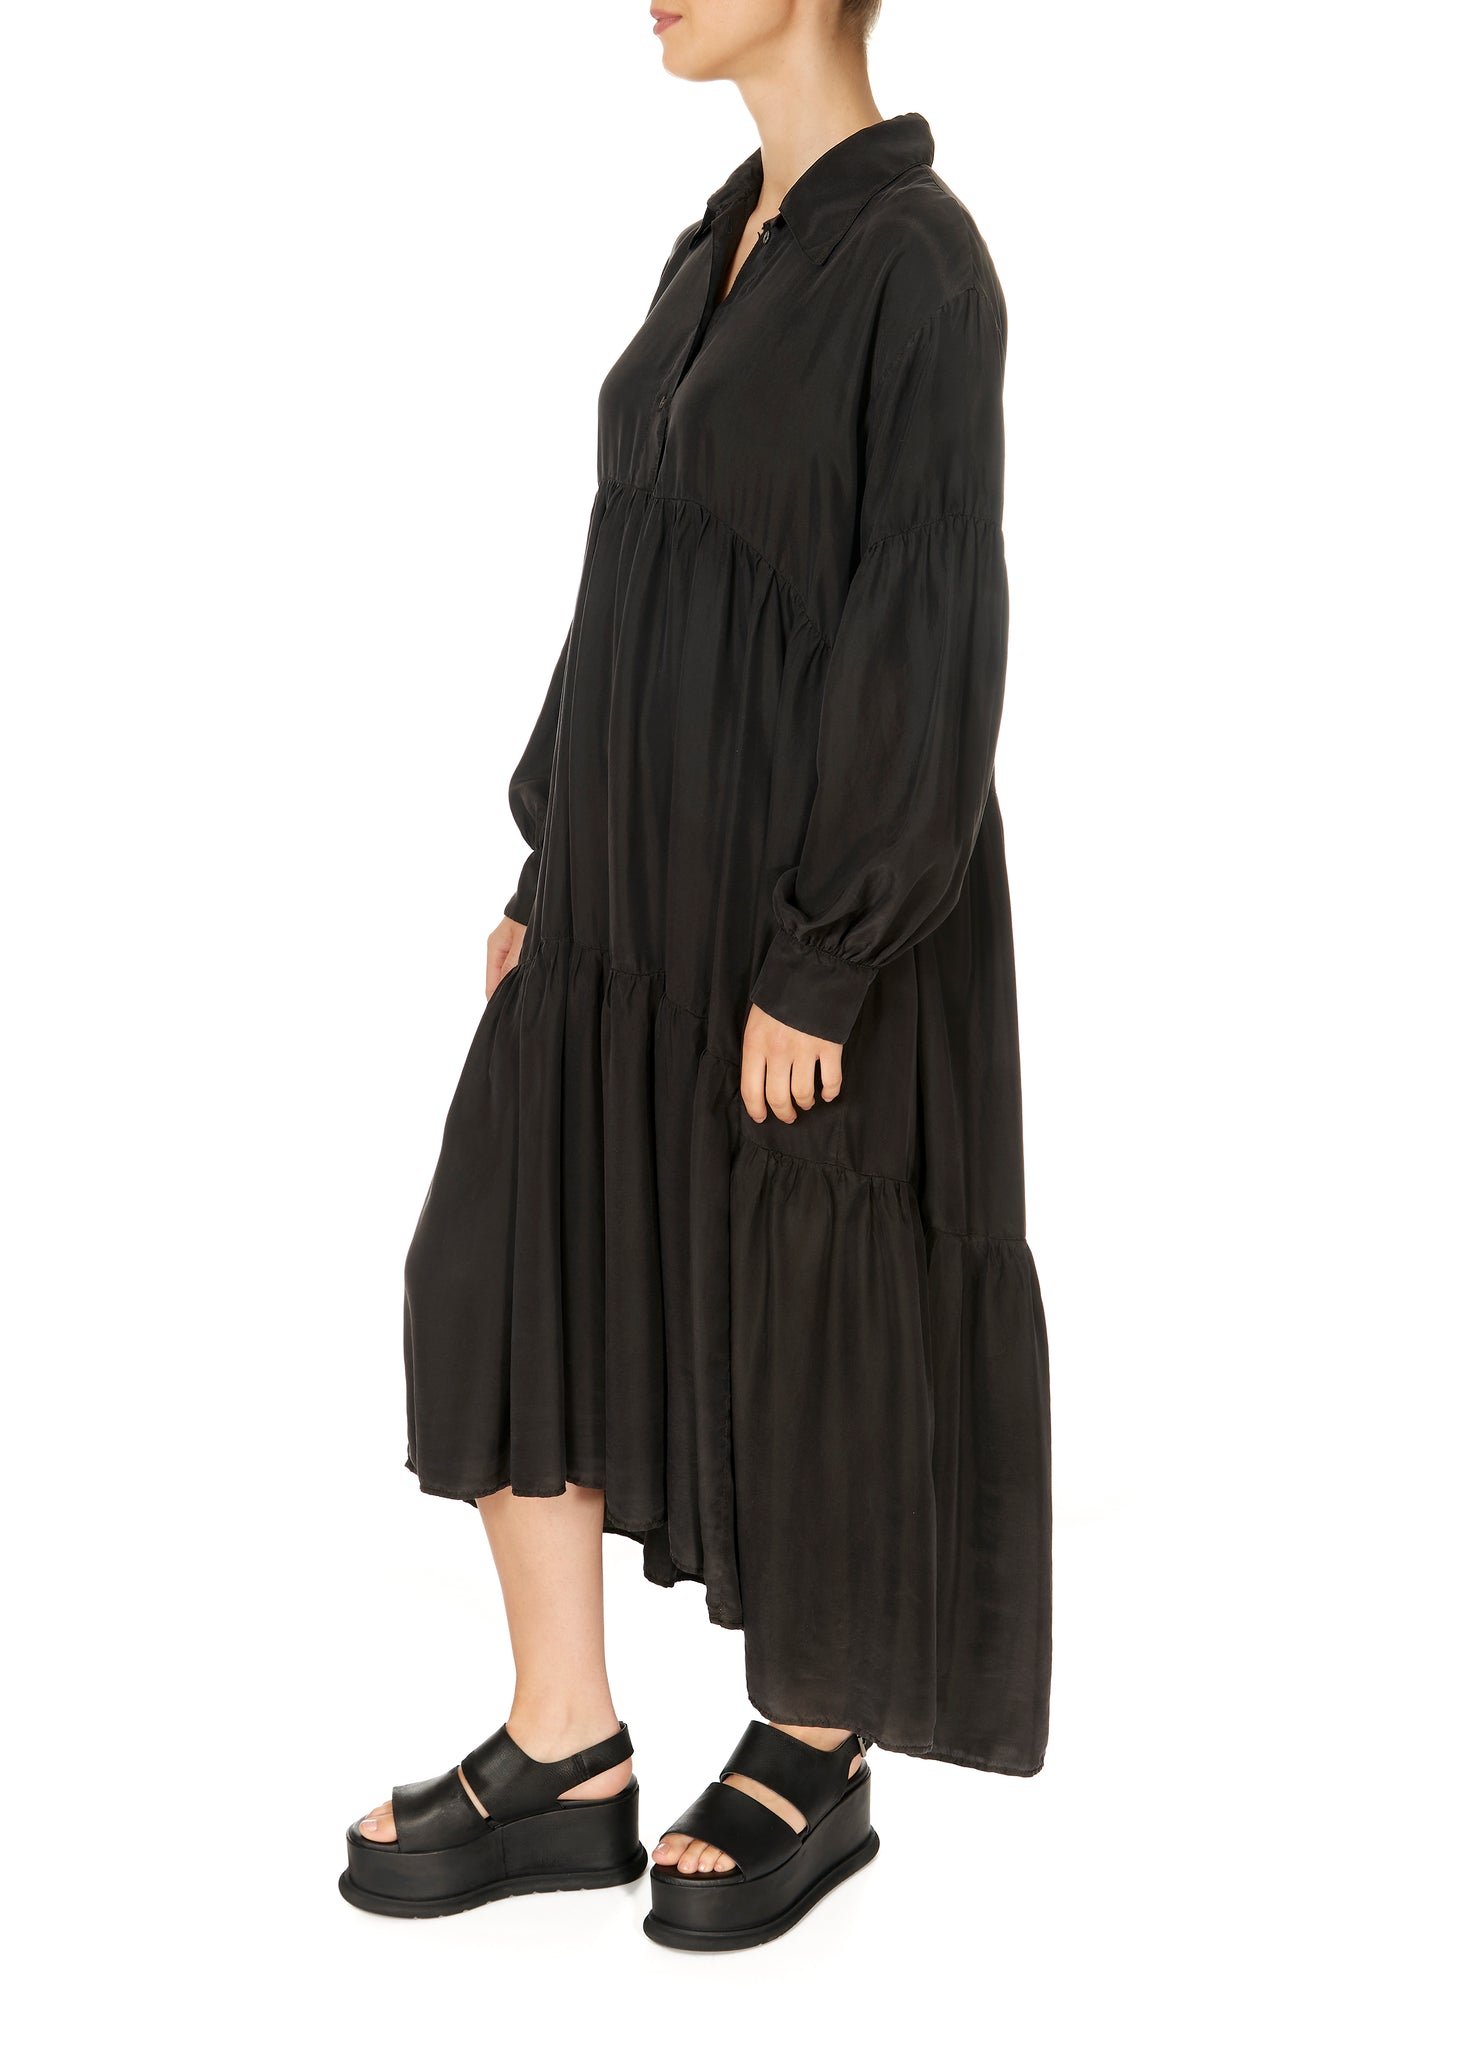 Sfizio Habotai Black Tiered Dress